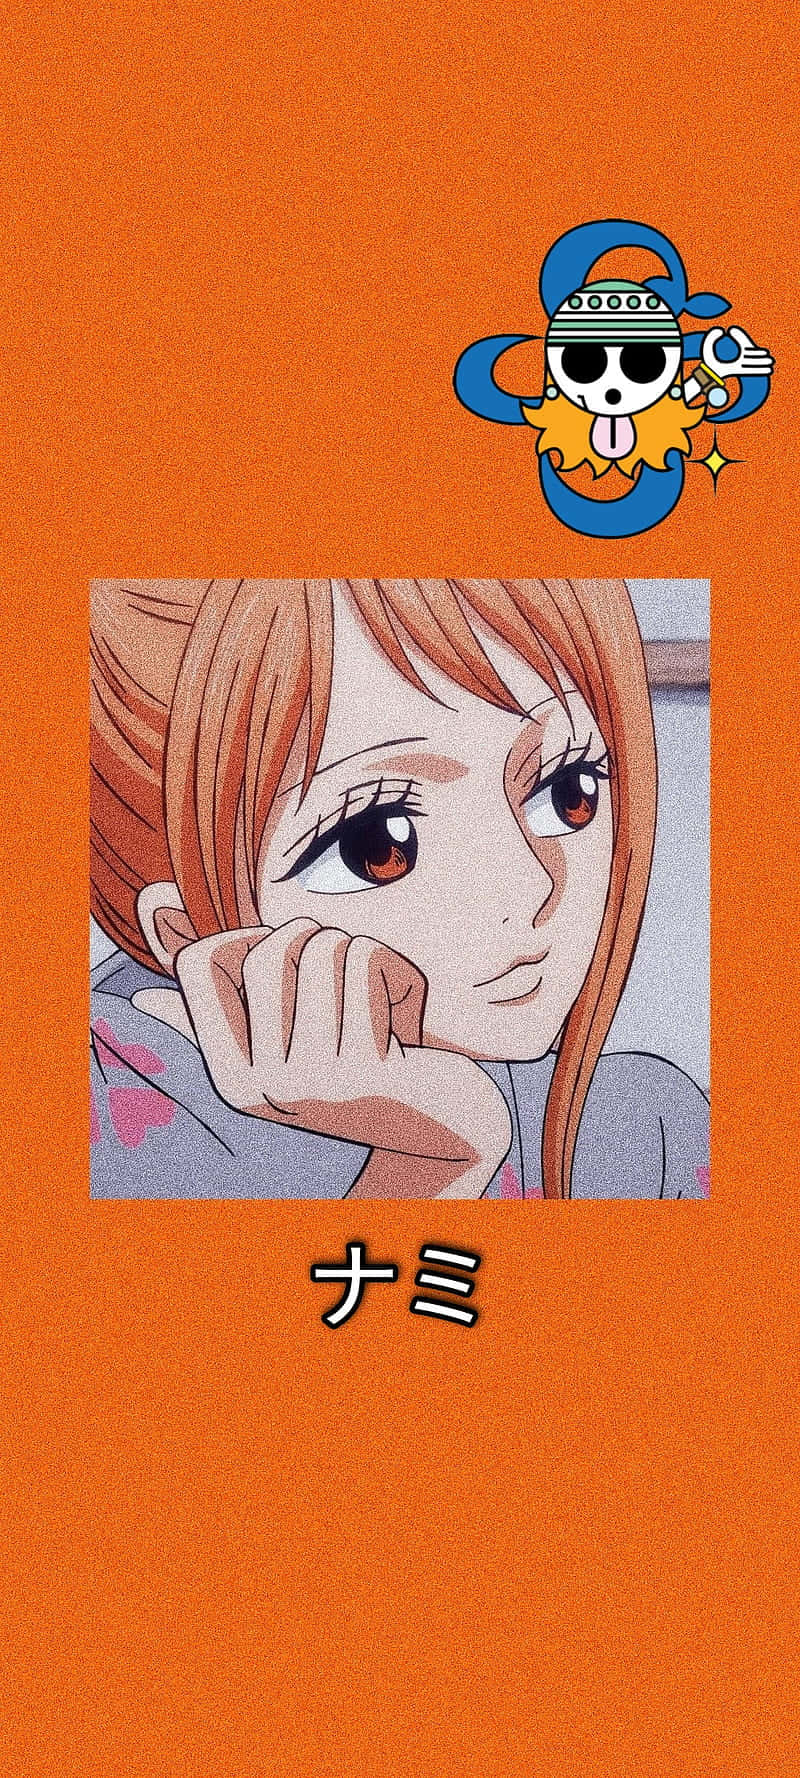 Nami fra One Piece Orange Anime Character Bakgrund Wallpaper